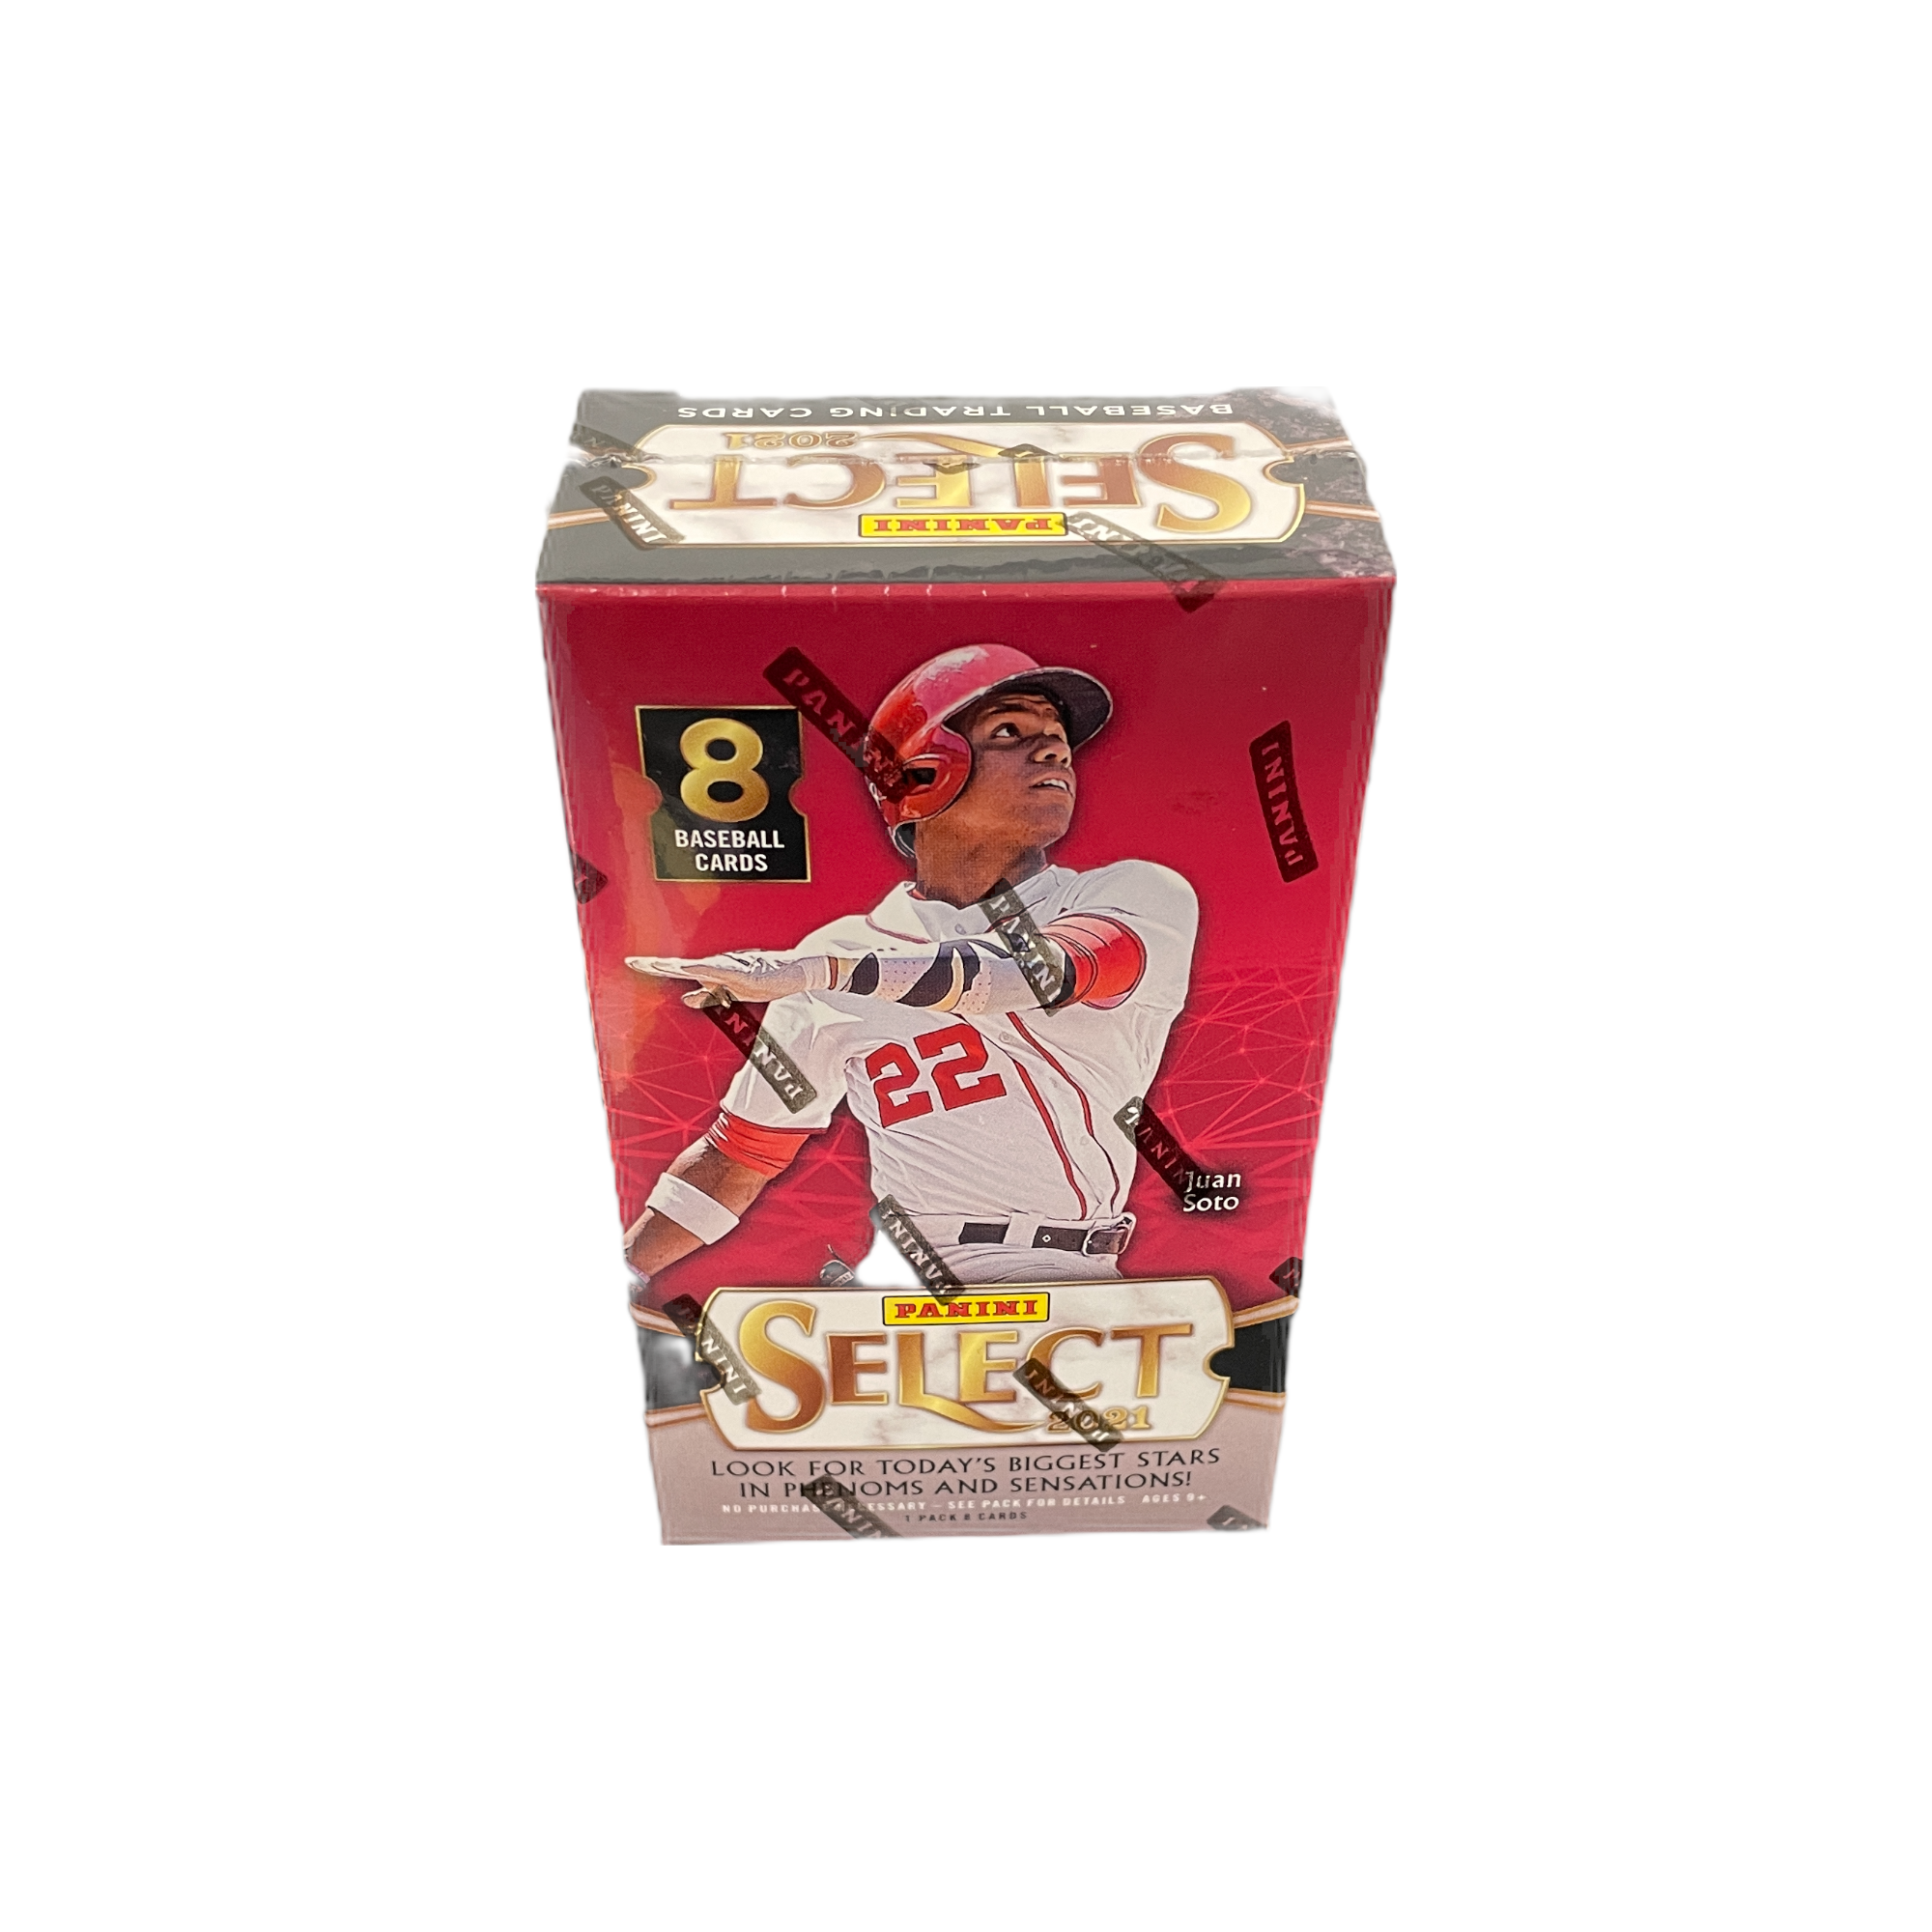 2021 Select Baseball Cereal Box